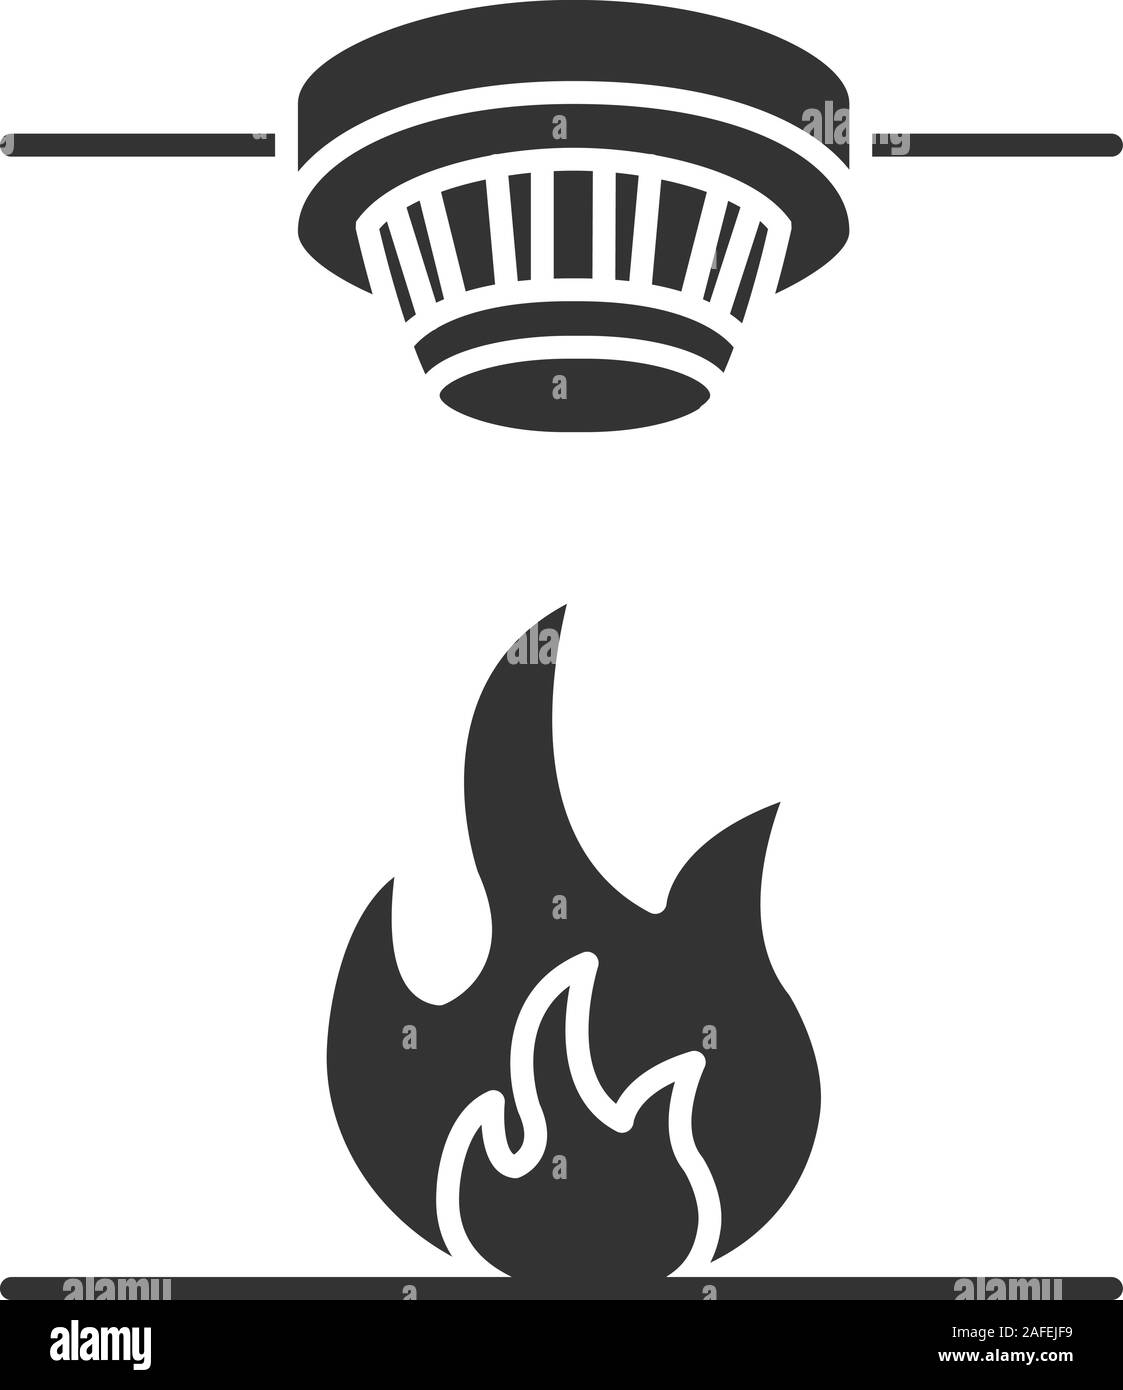 Smoke detector icon Black and White Stock Photos & Images - Alamy